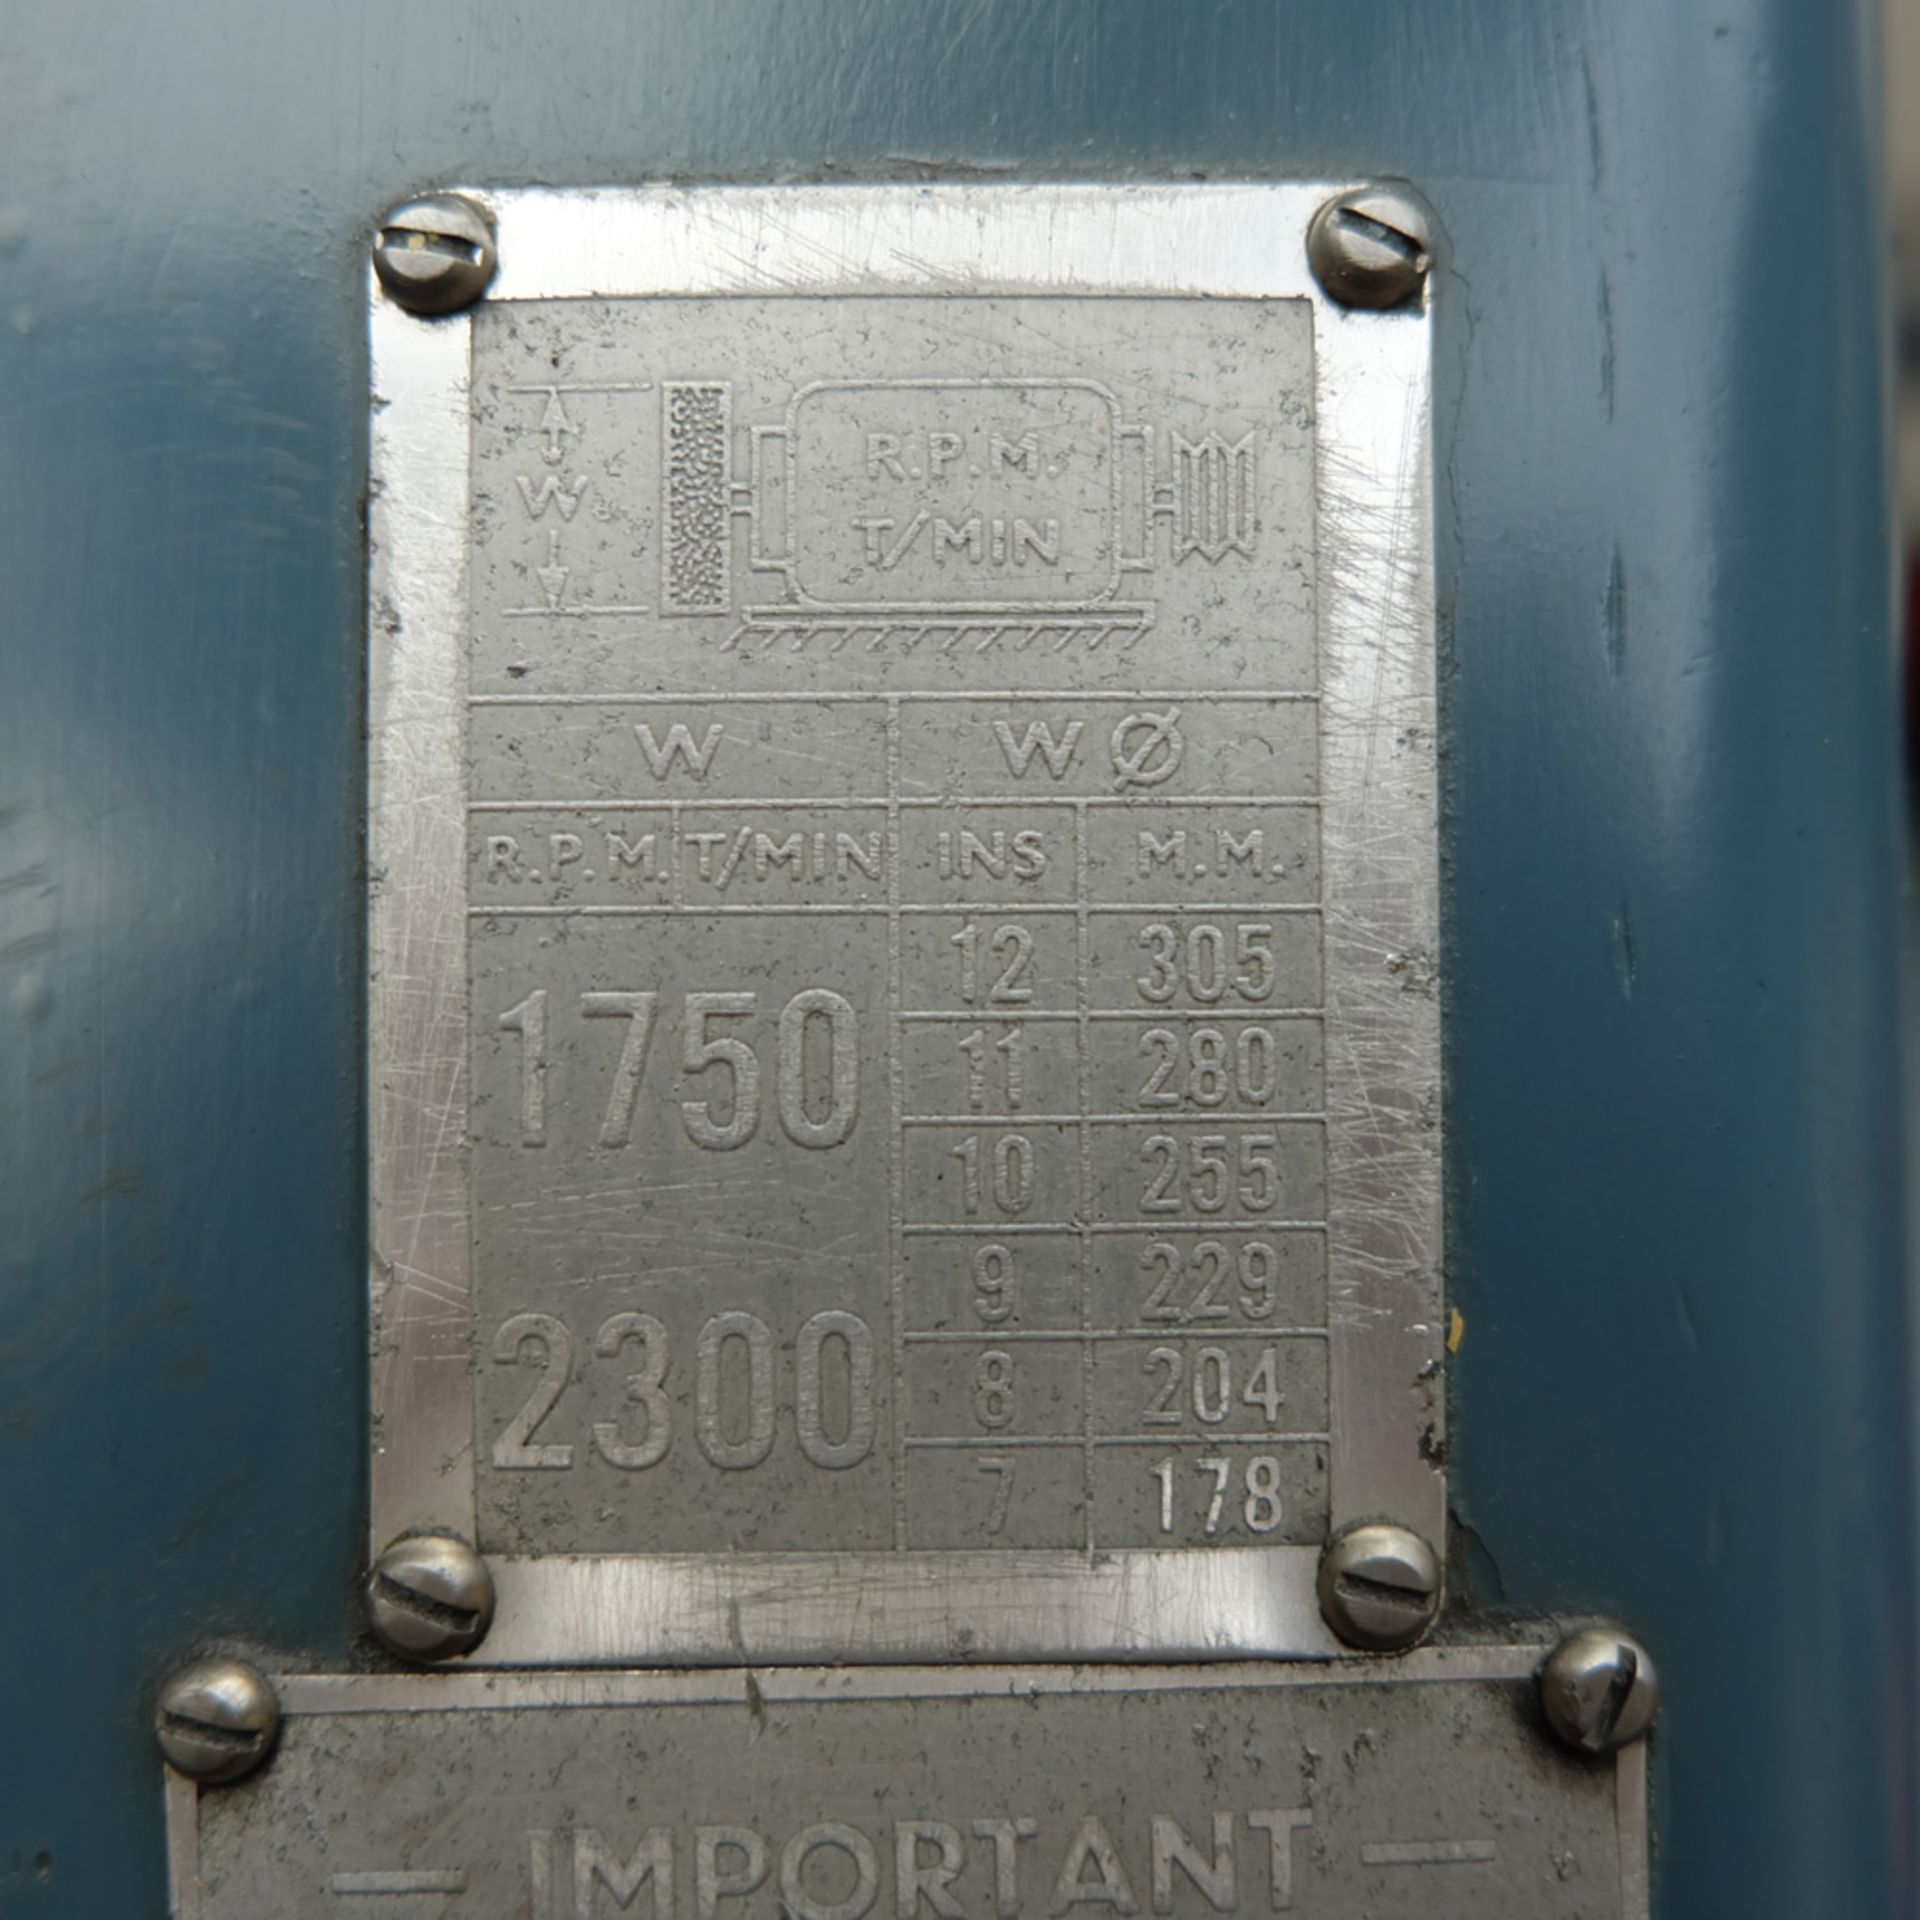 Jones & Shipman Model 1310 EIU Universal Cylindrical Grinder. Capacity 18" x 8". - Image 11 of 11